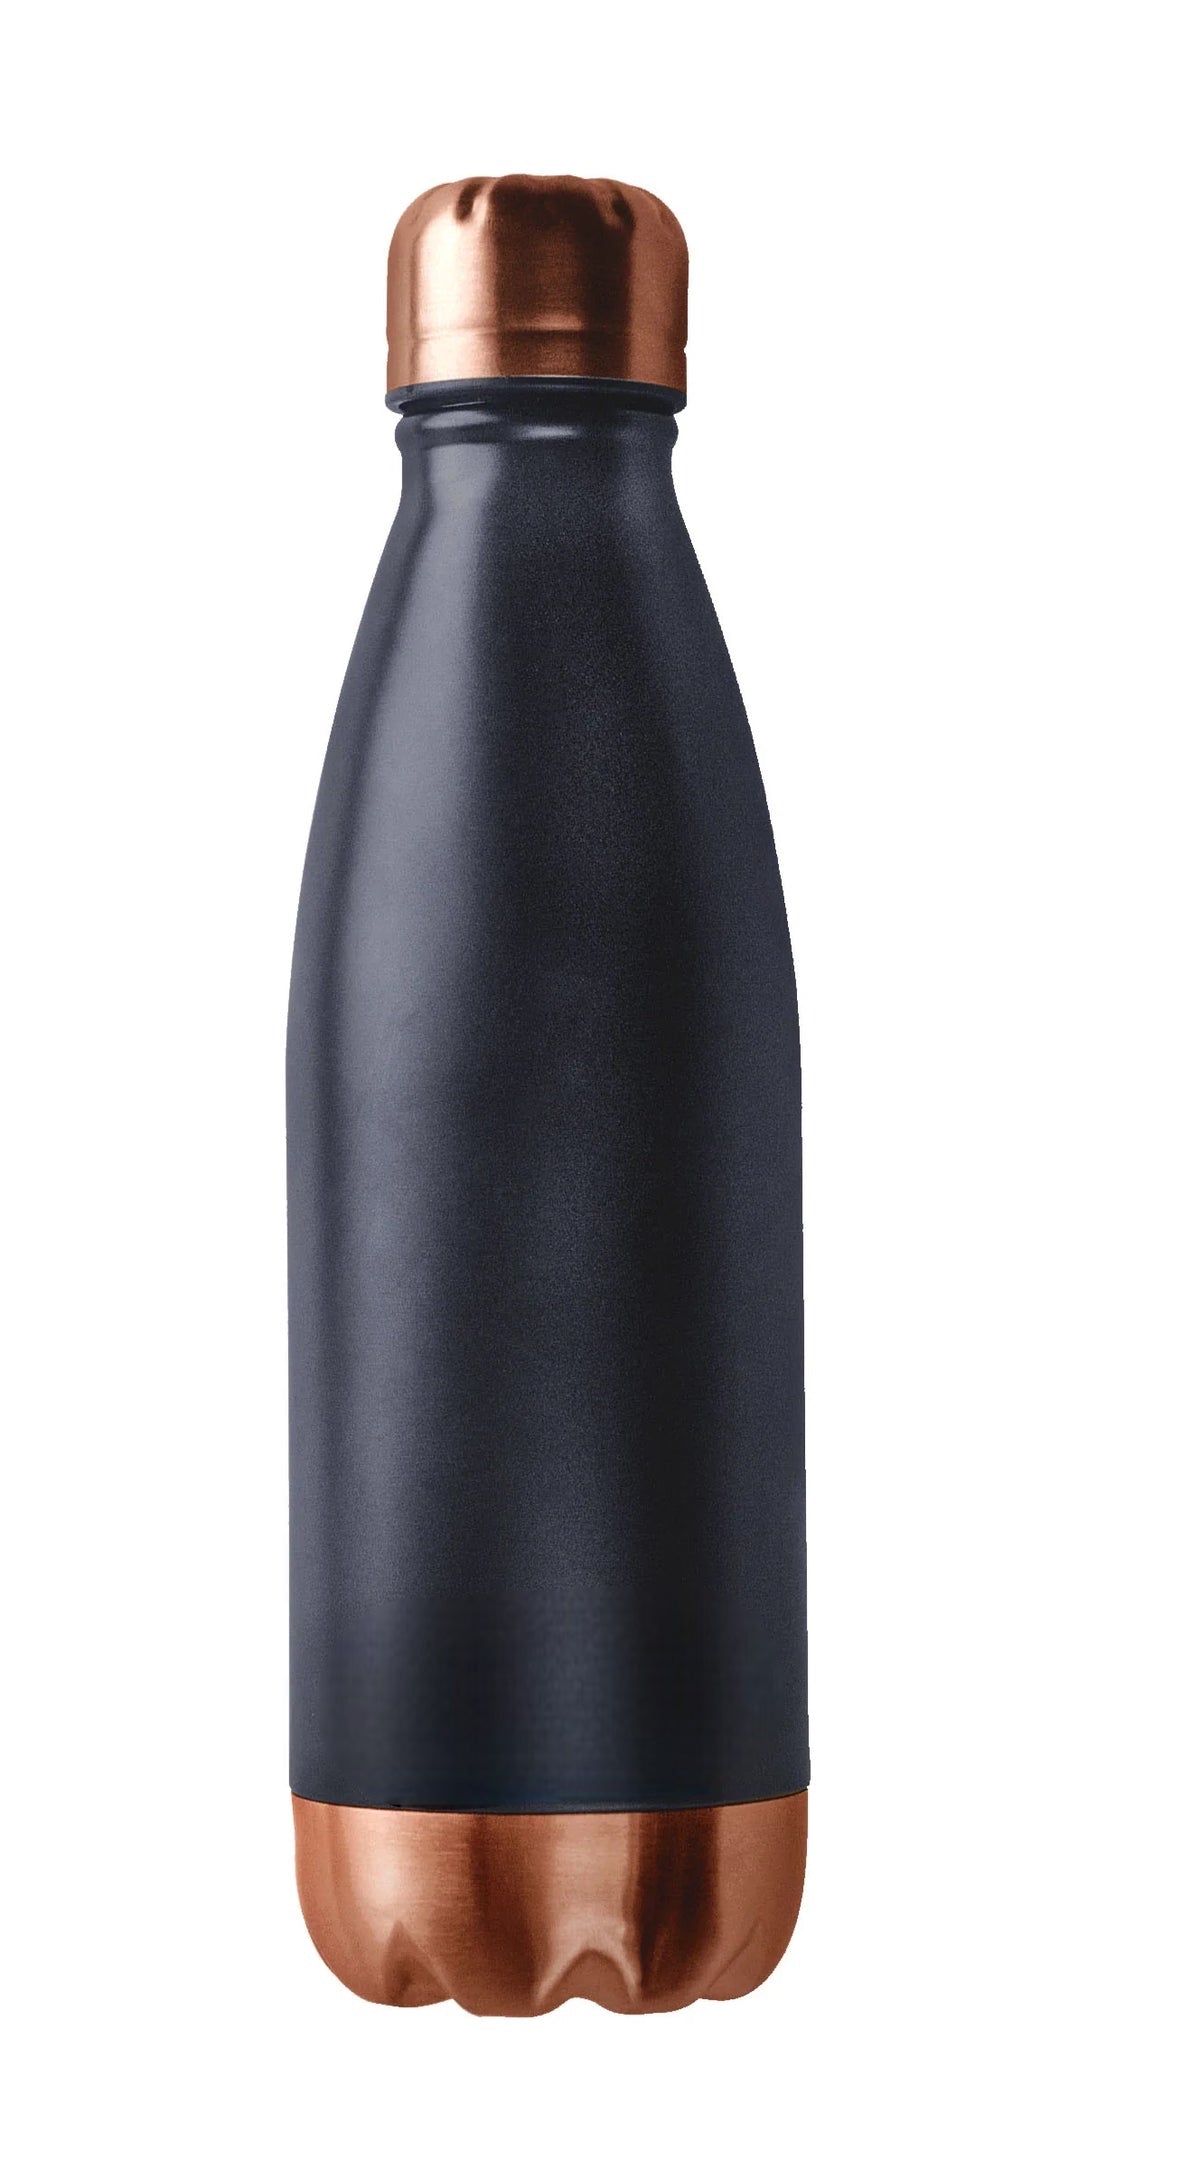 Personalized water bottle 17OZ - Black/Copper